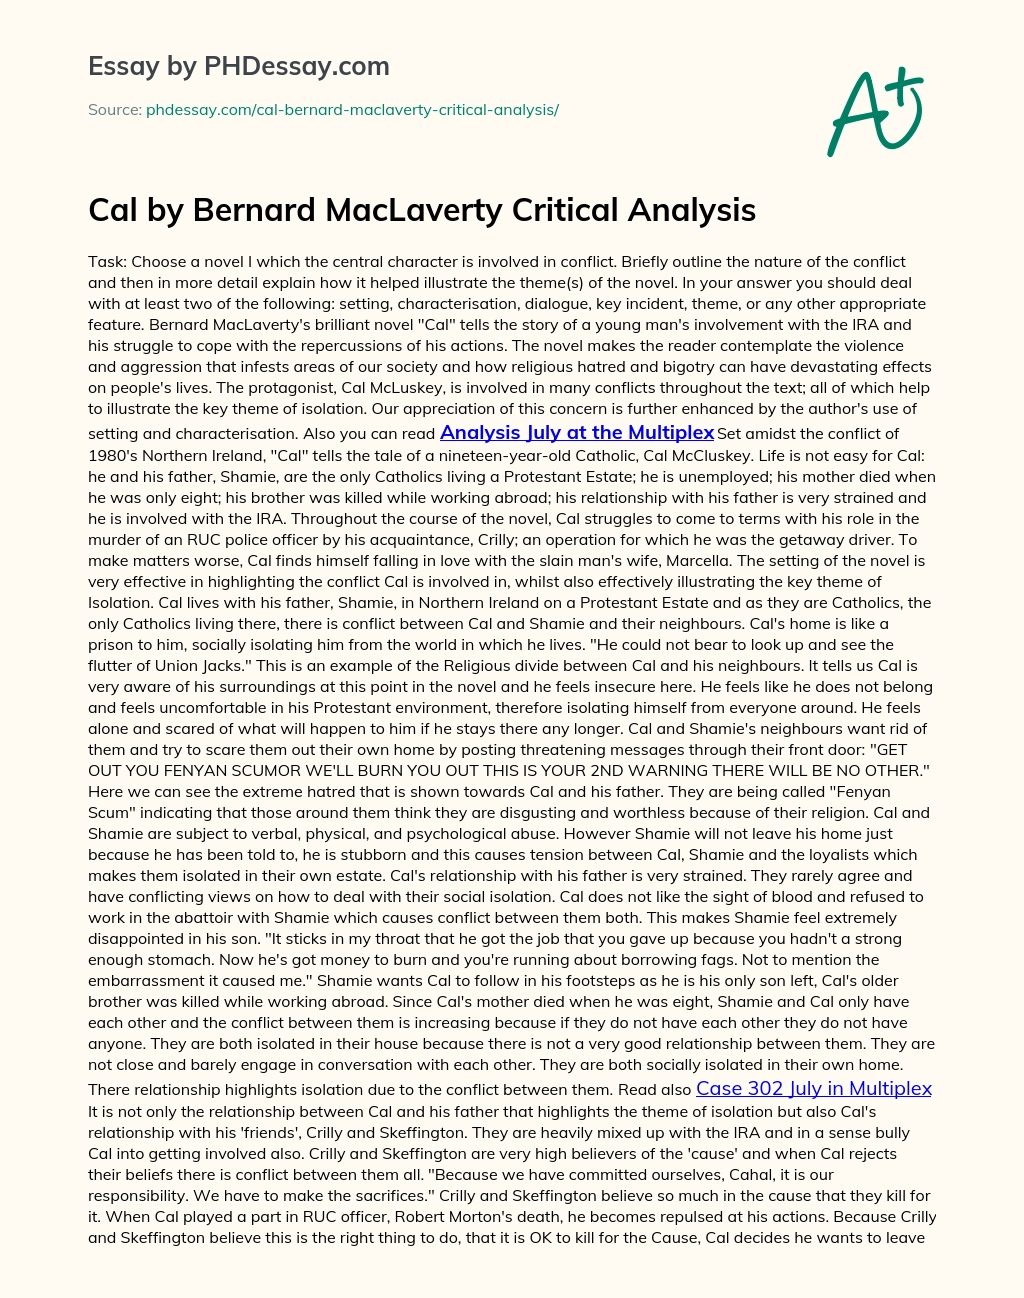 Cal by Bernard MacLaverty Critical Analysis essay